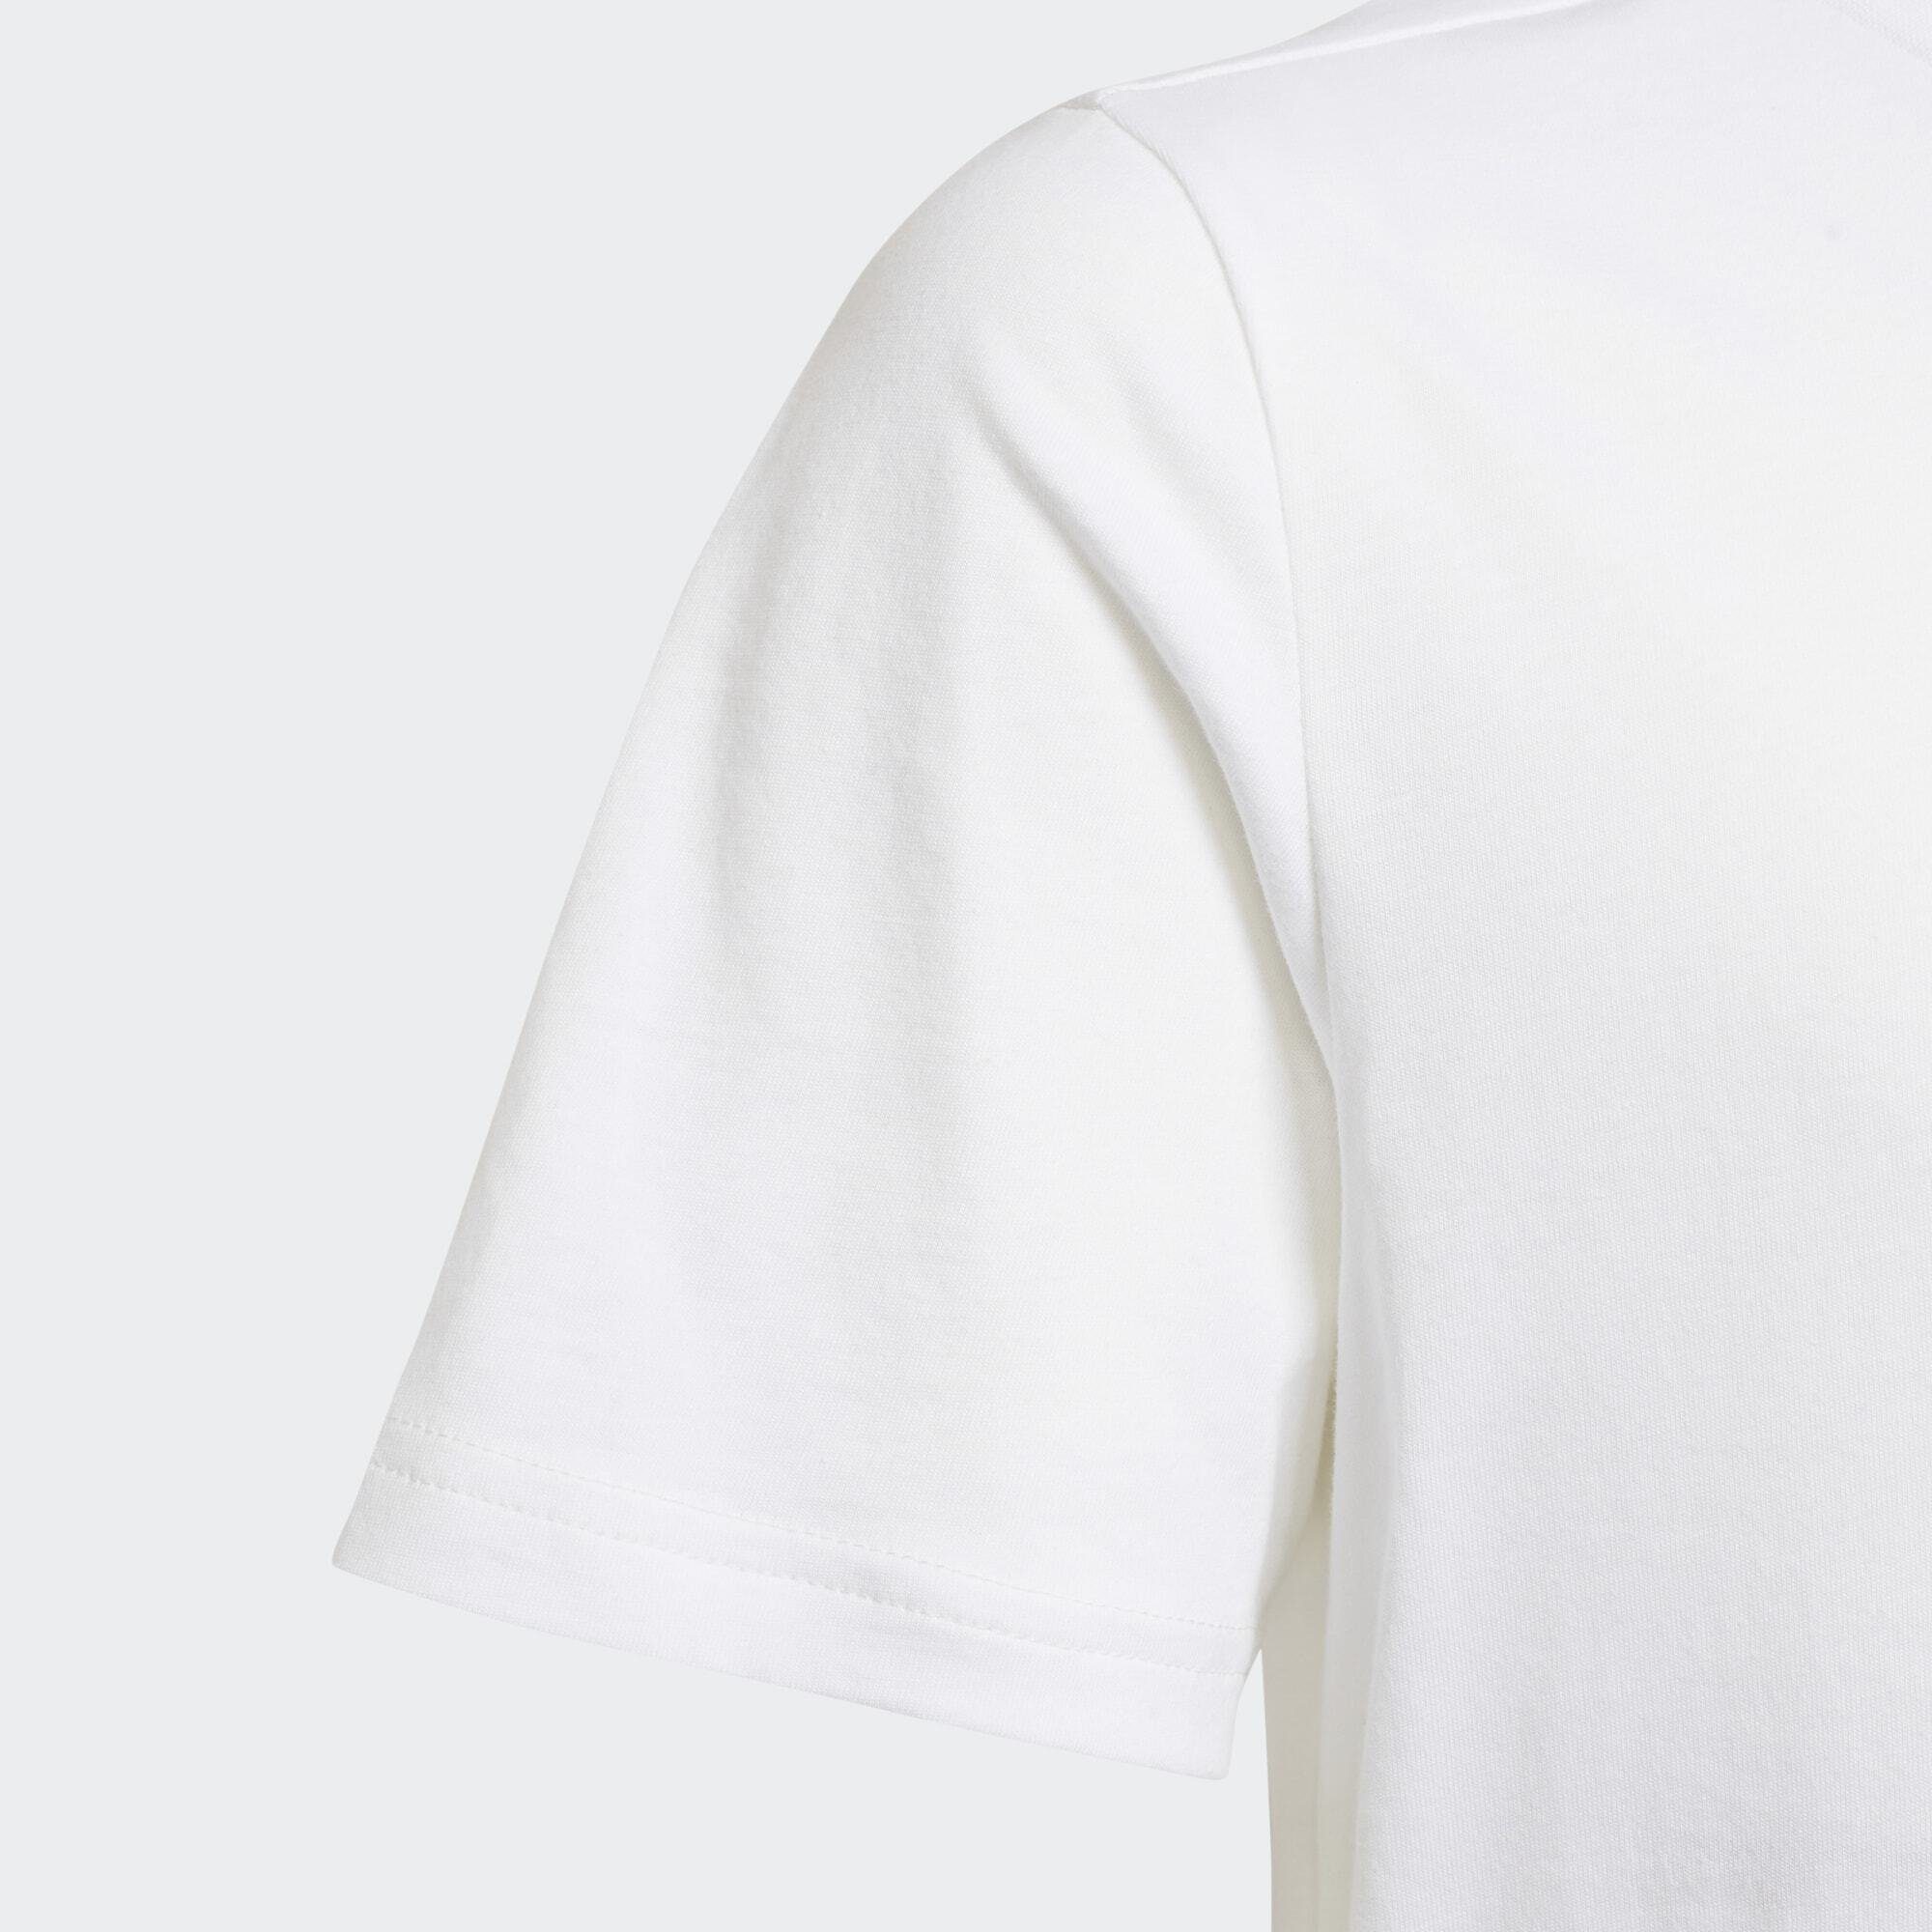 adidas T-SHIRT Originals ADICOLOR T-Shirt White